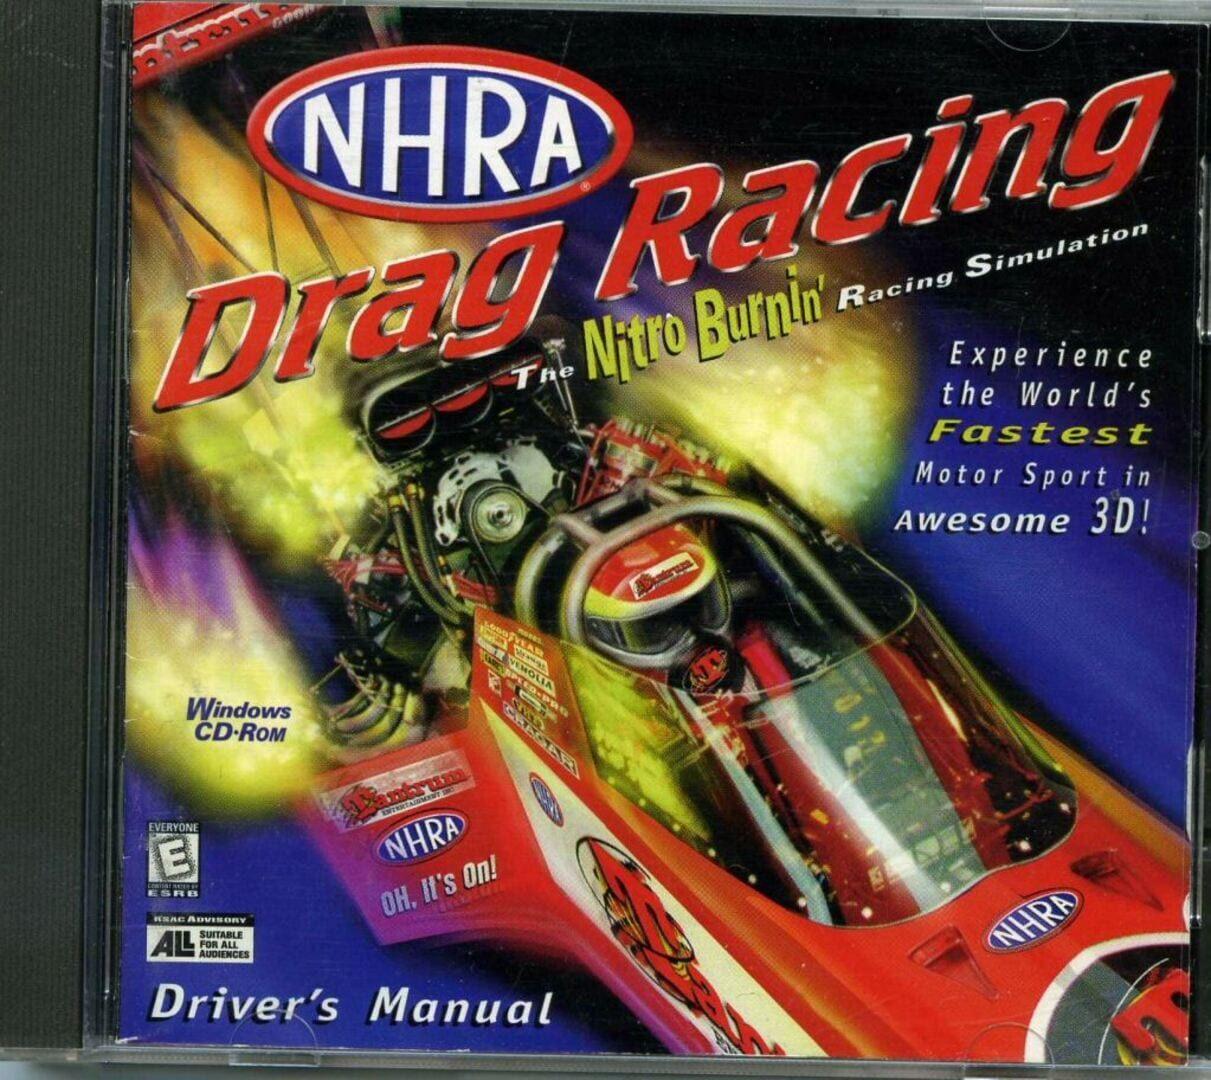 NHRA Drag Racing cover art